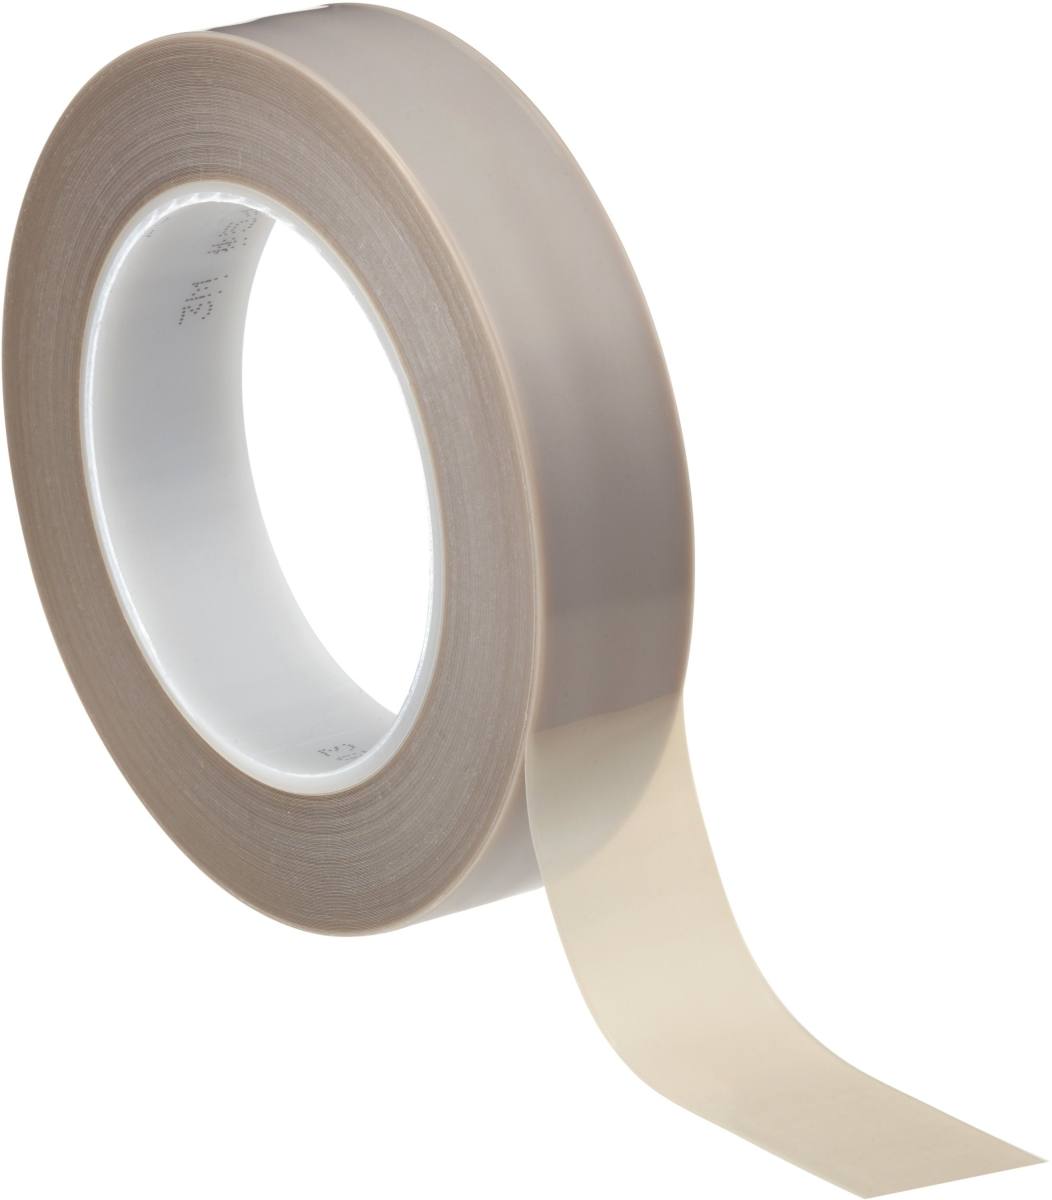 3M 5481 PTFE film adhesive tape 12mmx33m, 0.17mm, silicone